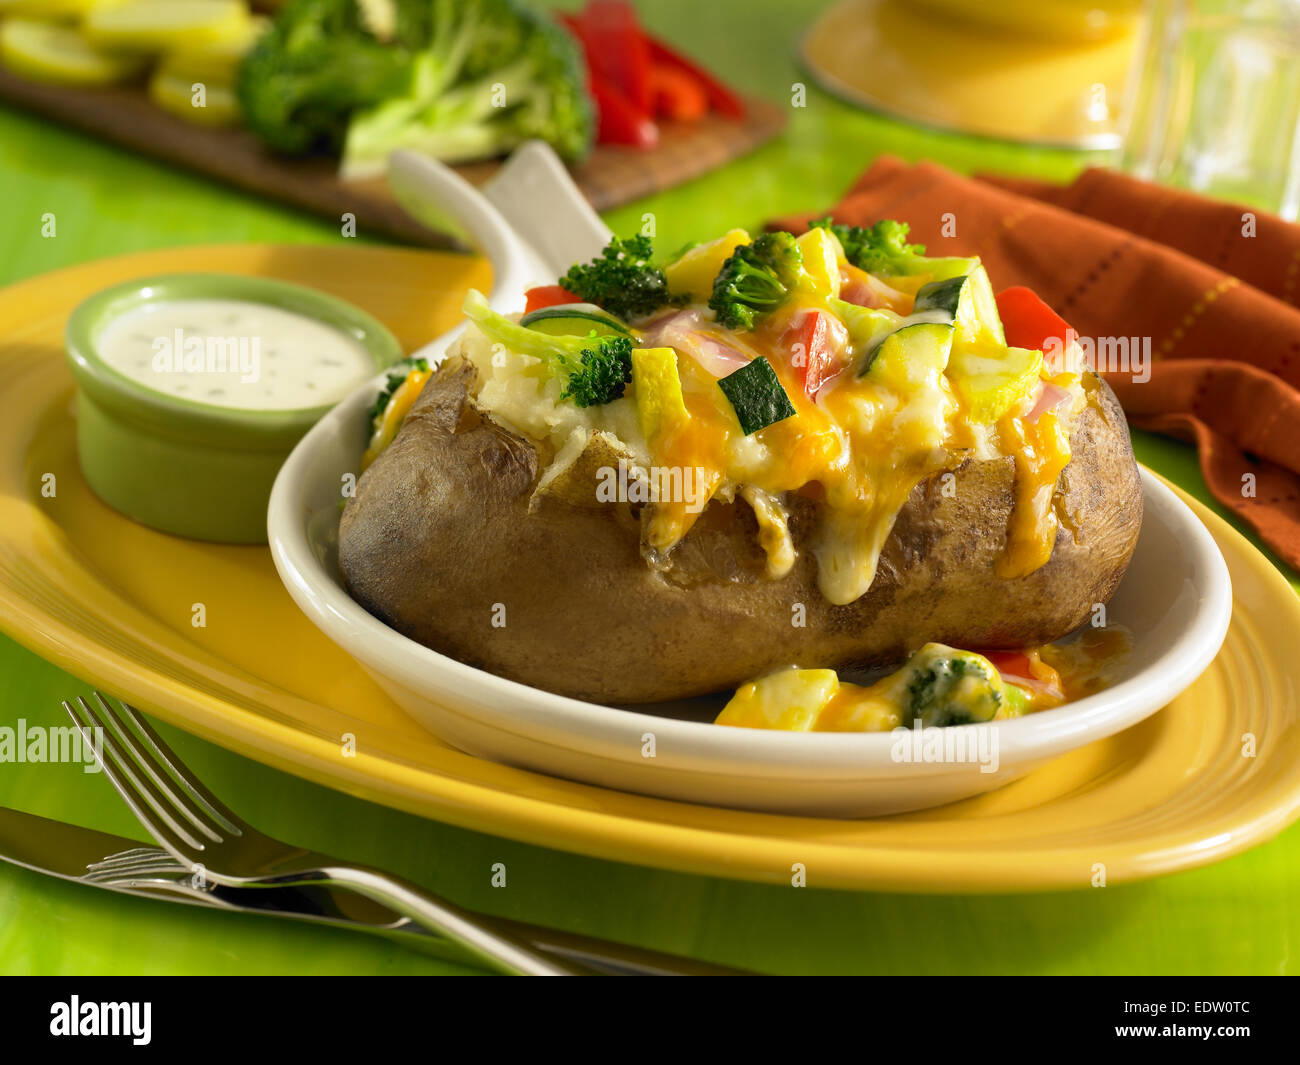 stuffed baked potato Stock Photo